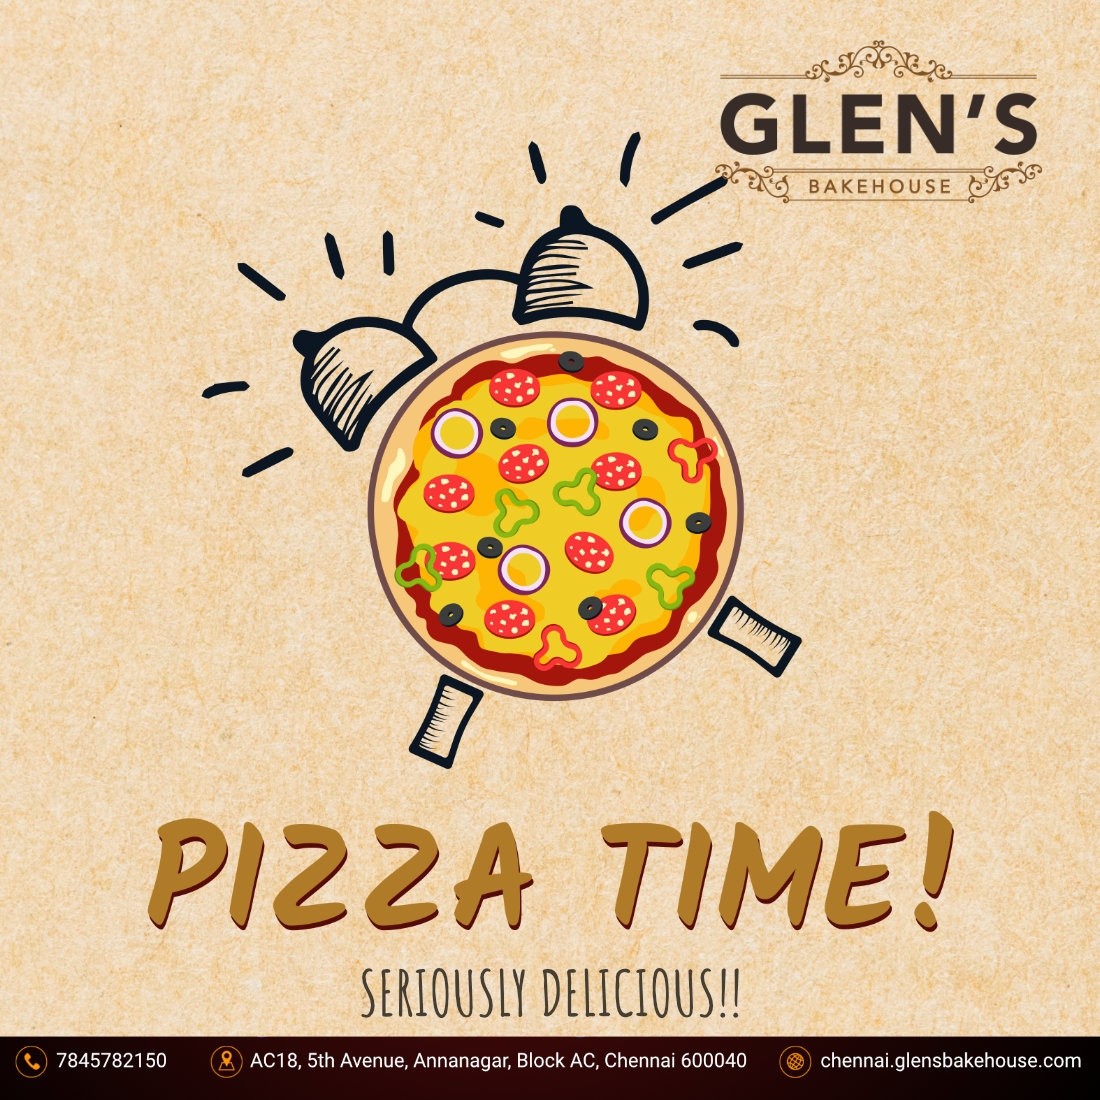 Glen's Bakehouse, Bangalore Social Media Graphics Designs Image 4